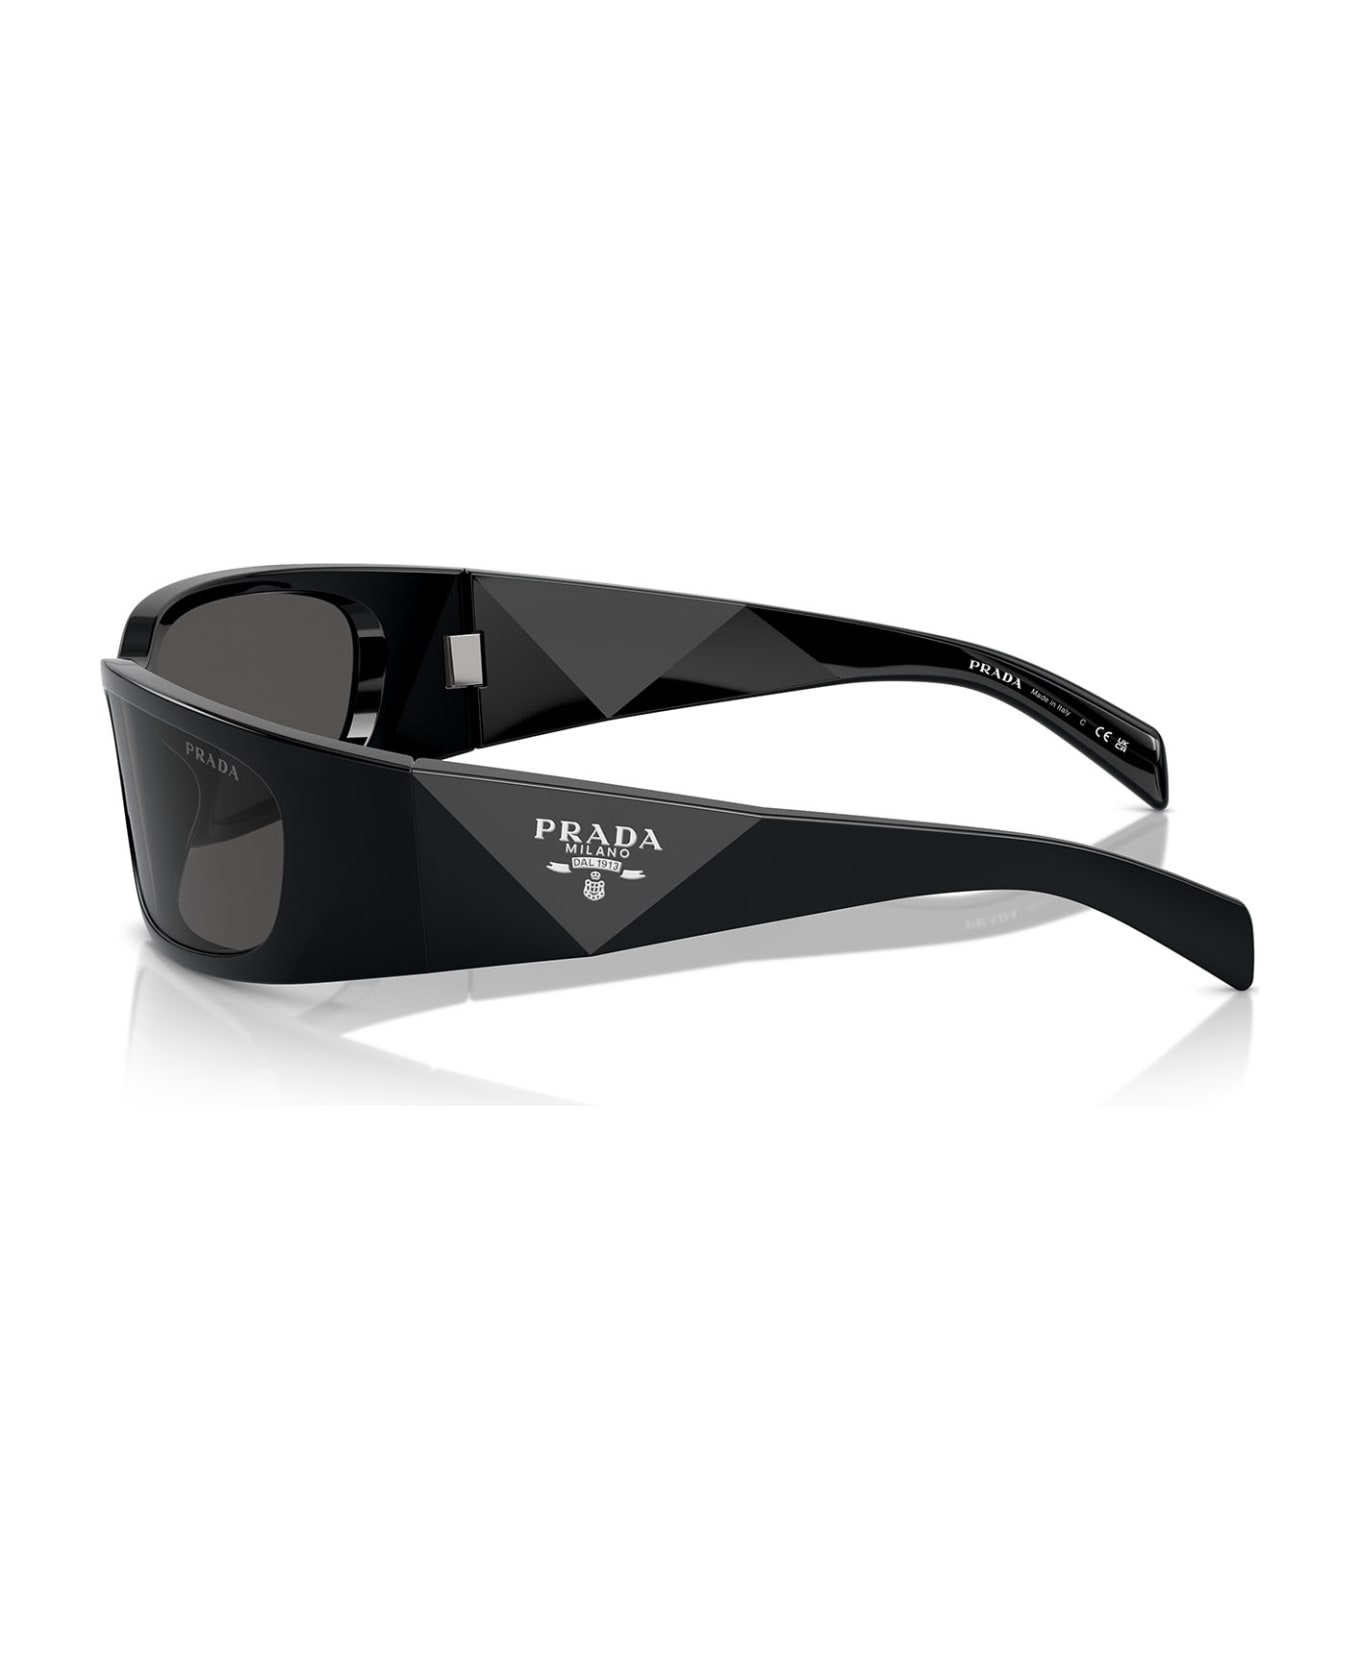 Prada Eyewear Pr A19s Black Sunglasses - Black